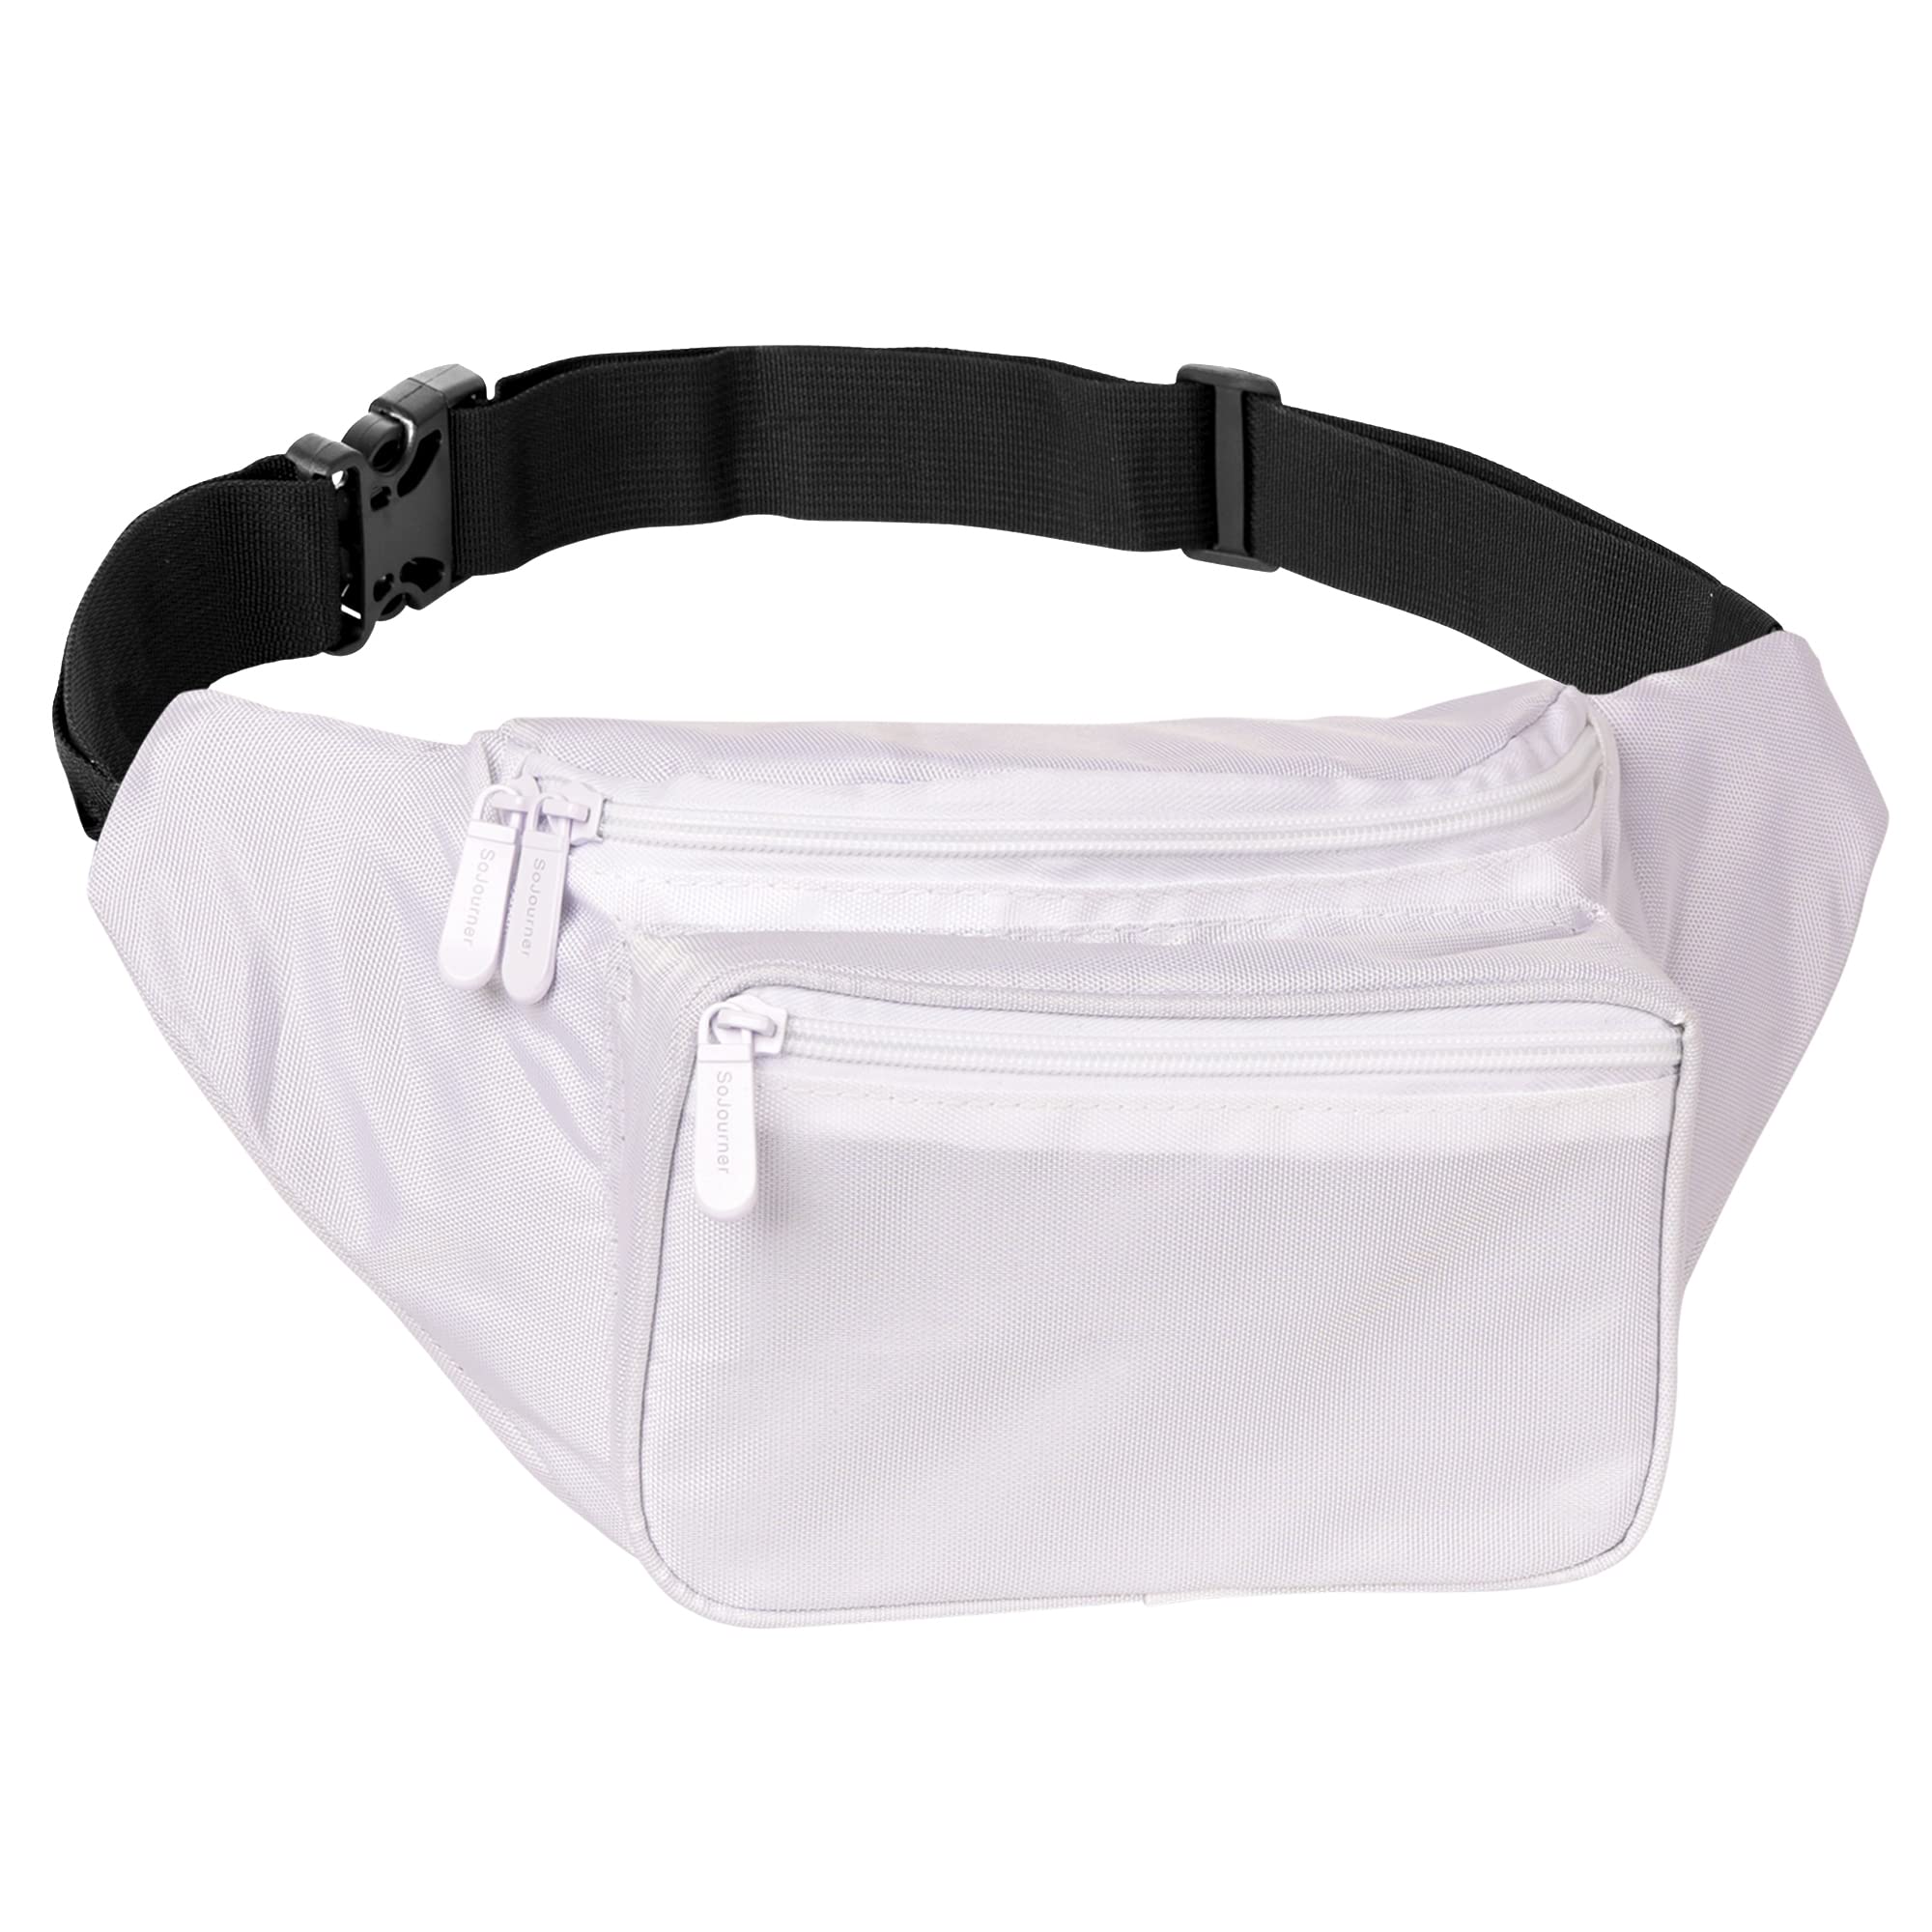 White Fanny Pack Belt Bag I Mens Fanny Packs for Women Fashionable - Crossbody Bag Bum bag Waist Bag Waist Pack - For Halloween costumes, for Hiking, Running, Travel, Waterproof and more